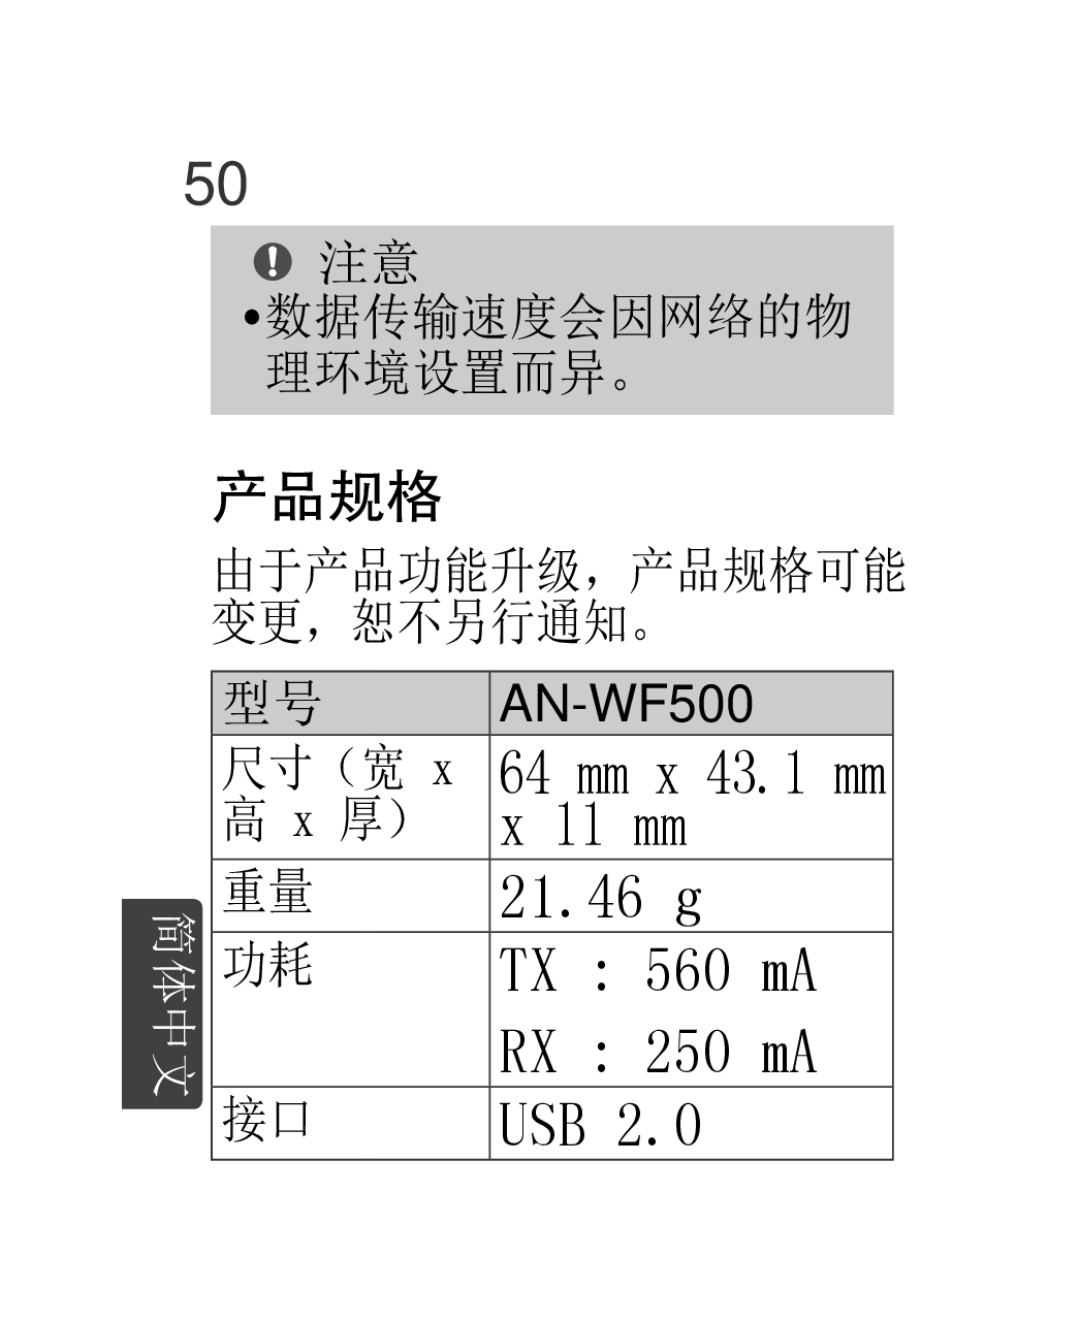 LG Electronics AN-WF500 owner manual 11 mm 